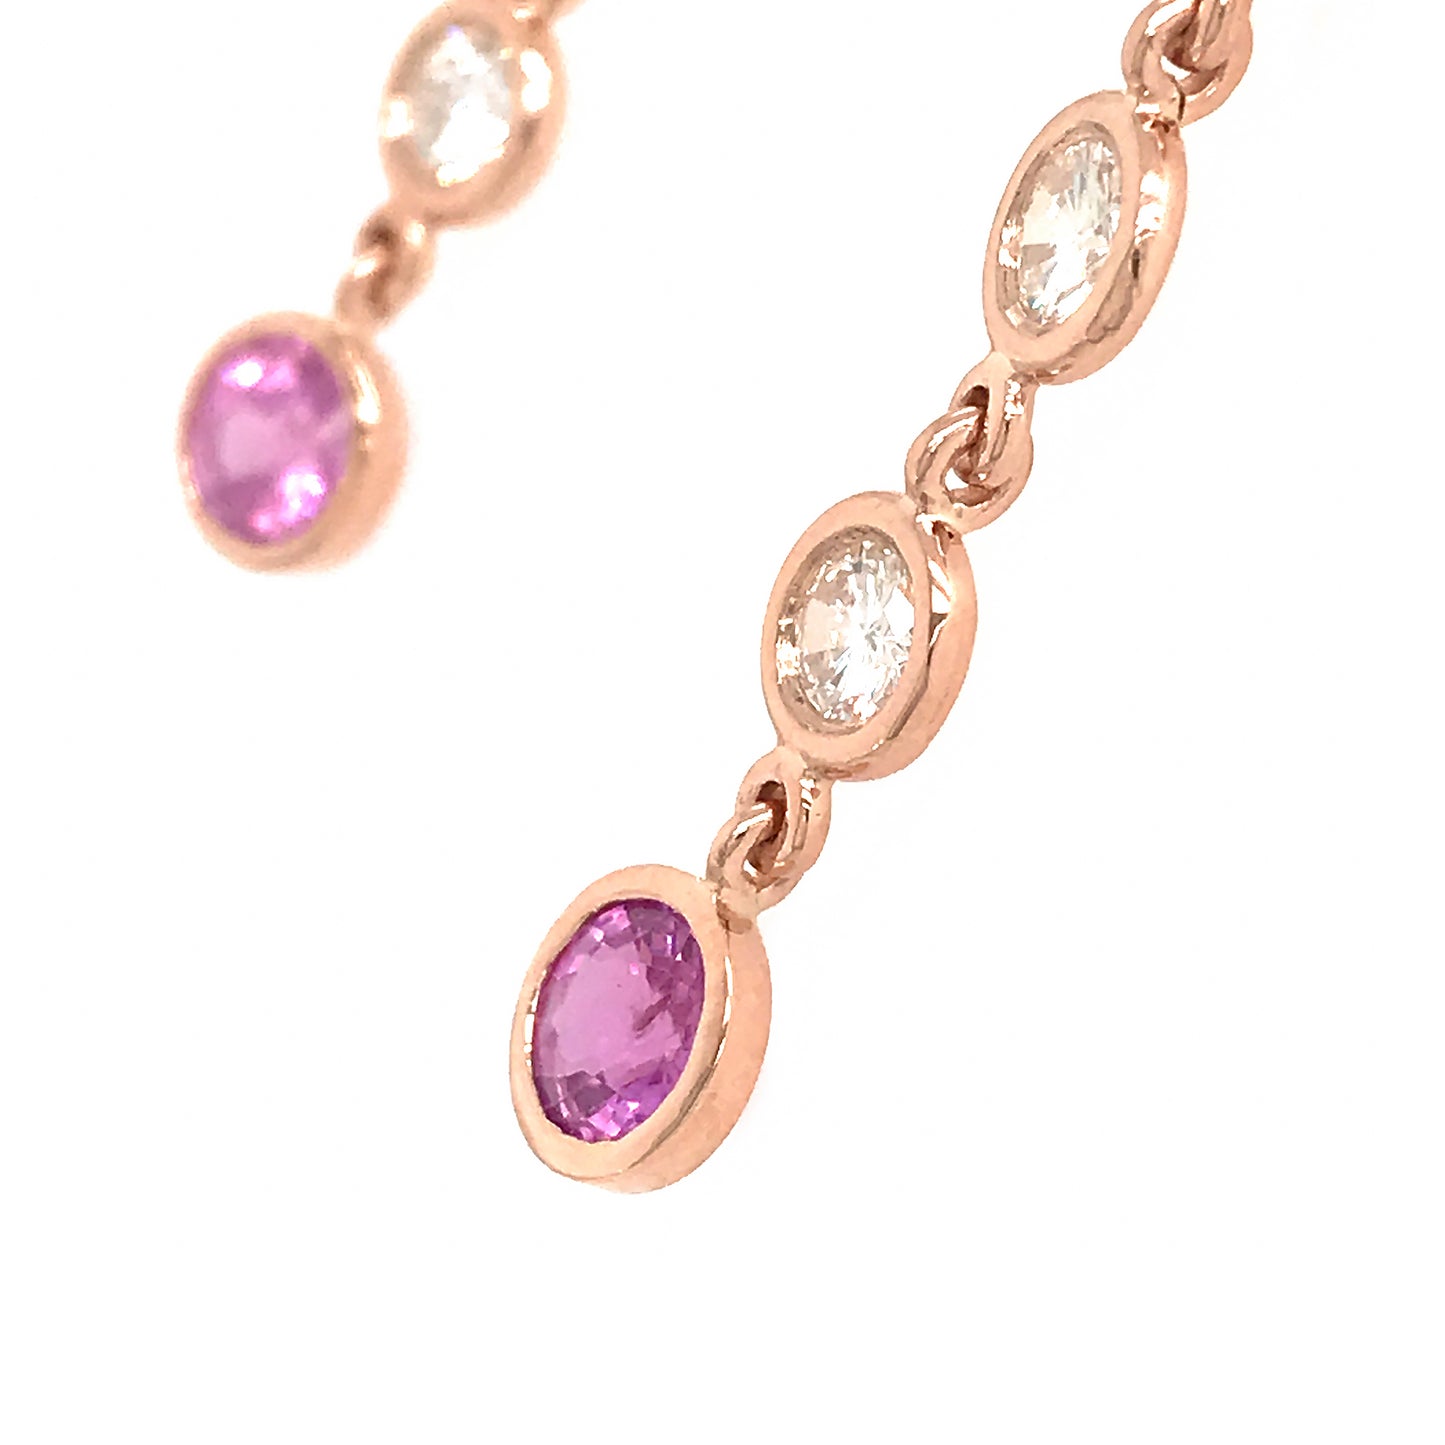 Diamond and Pink Sapphire Drop Earrings